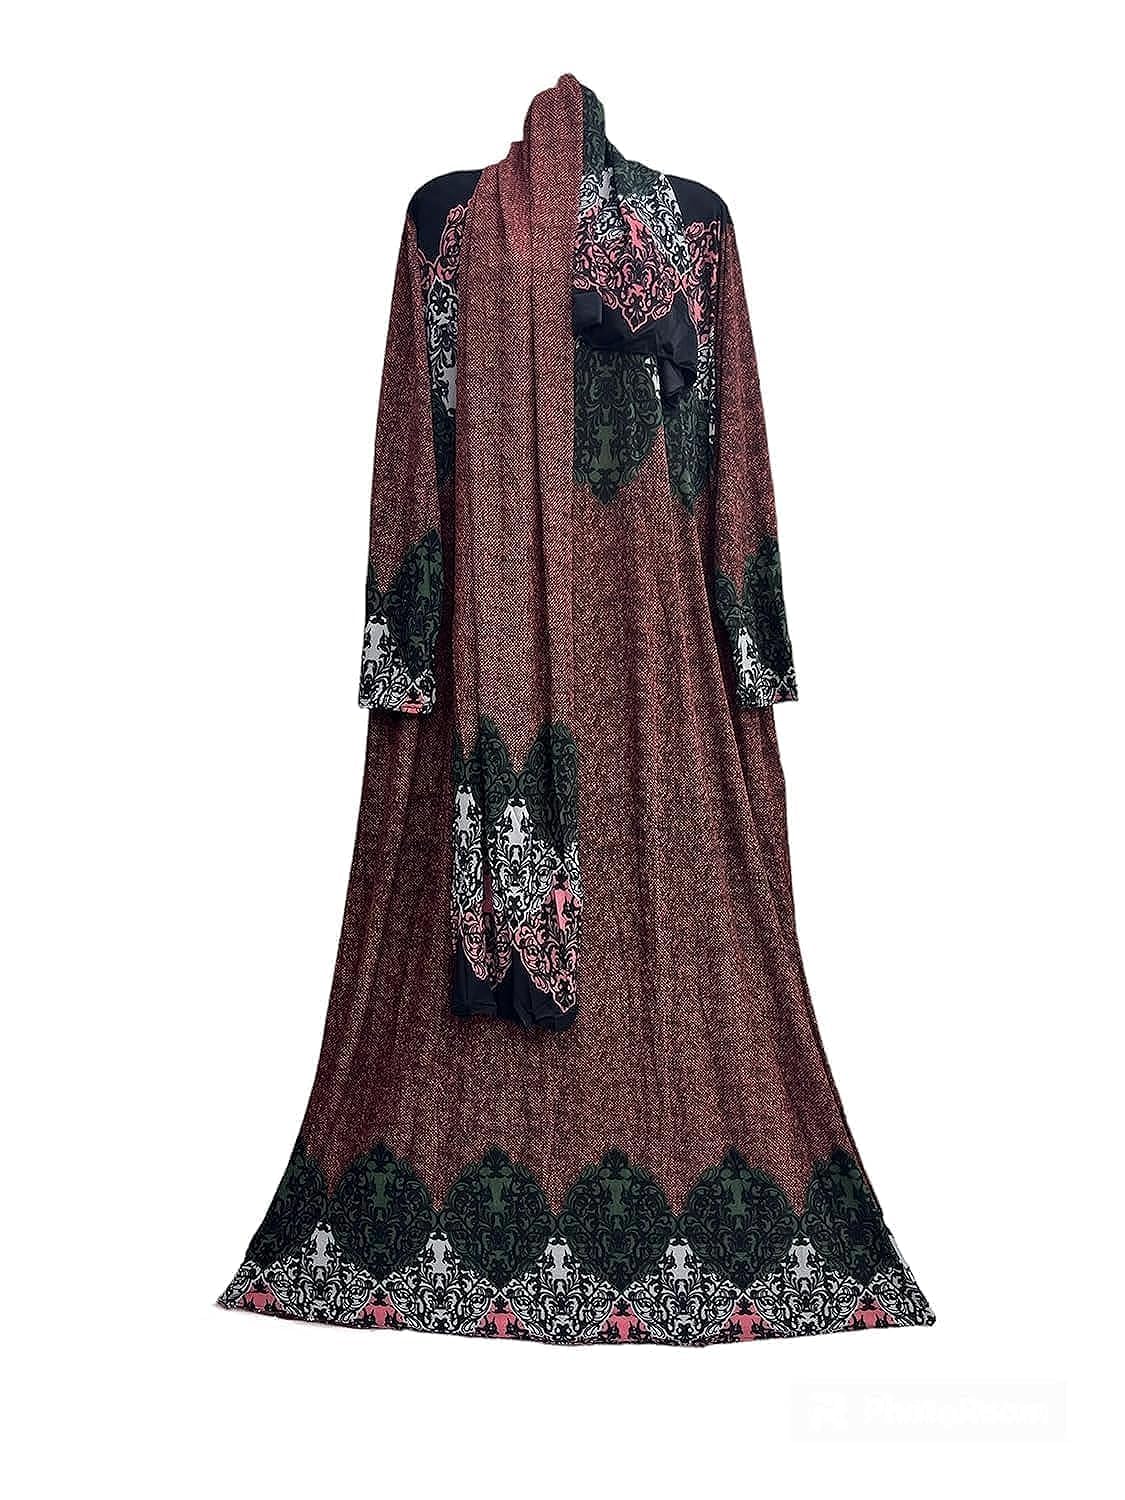 FindsCorner - Tarha Abaya Prayer Dress Prayer Dress اسدال الصلاه Plus, Free Size For Muslim Women, Soft Breathable Elastic Super Comfy Clothe Material (Redish)